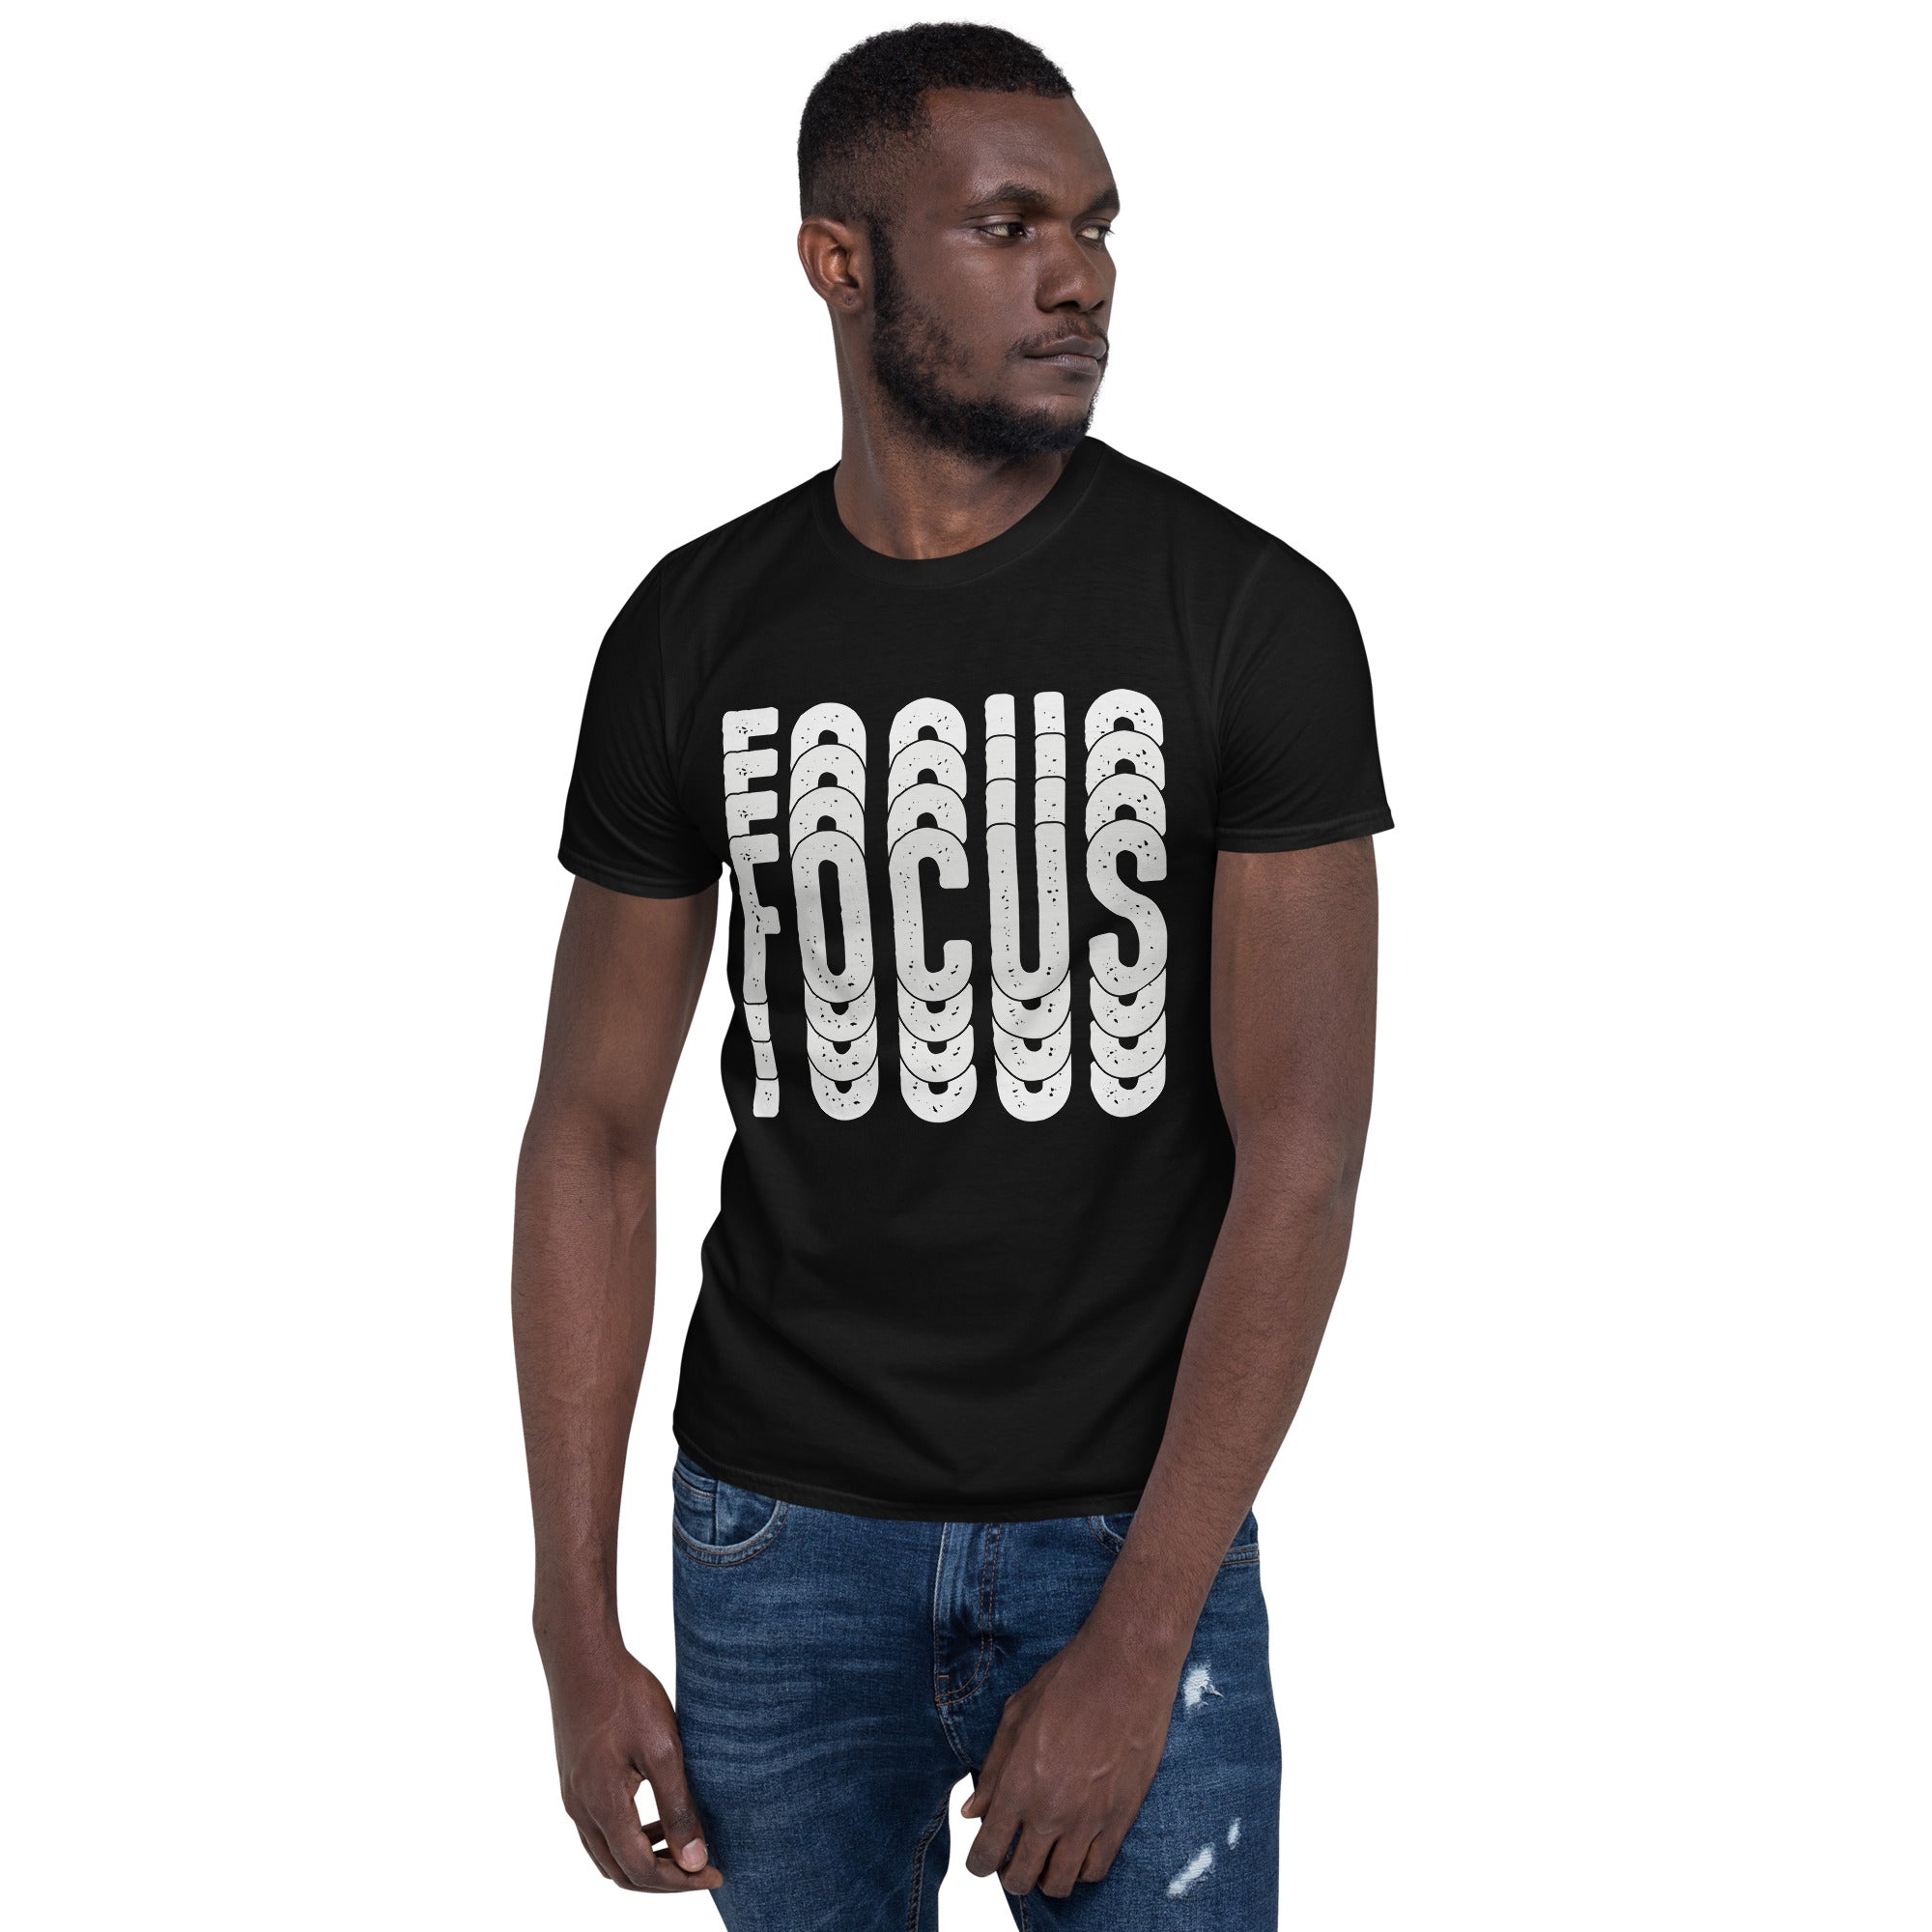 Focus - Short-Sleeve Unisex T-Shirt